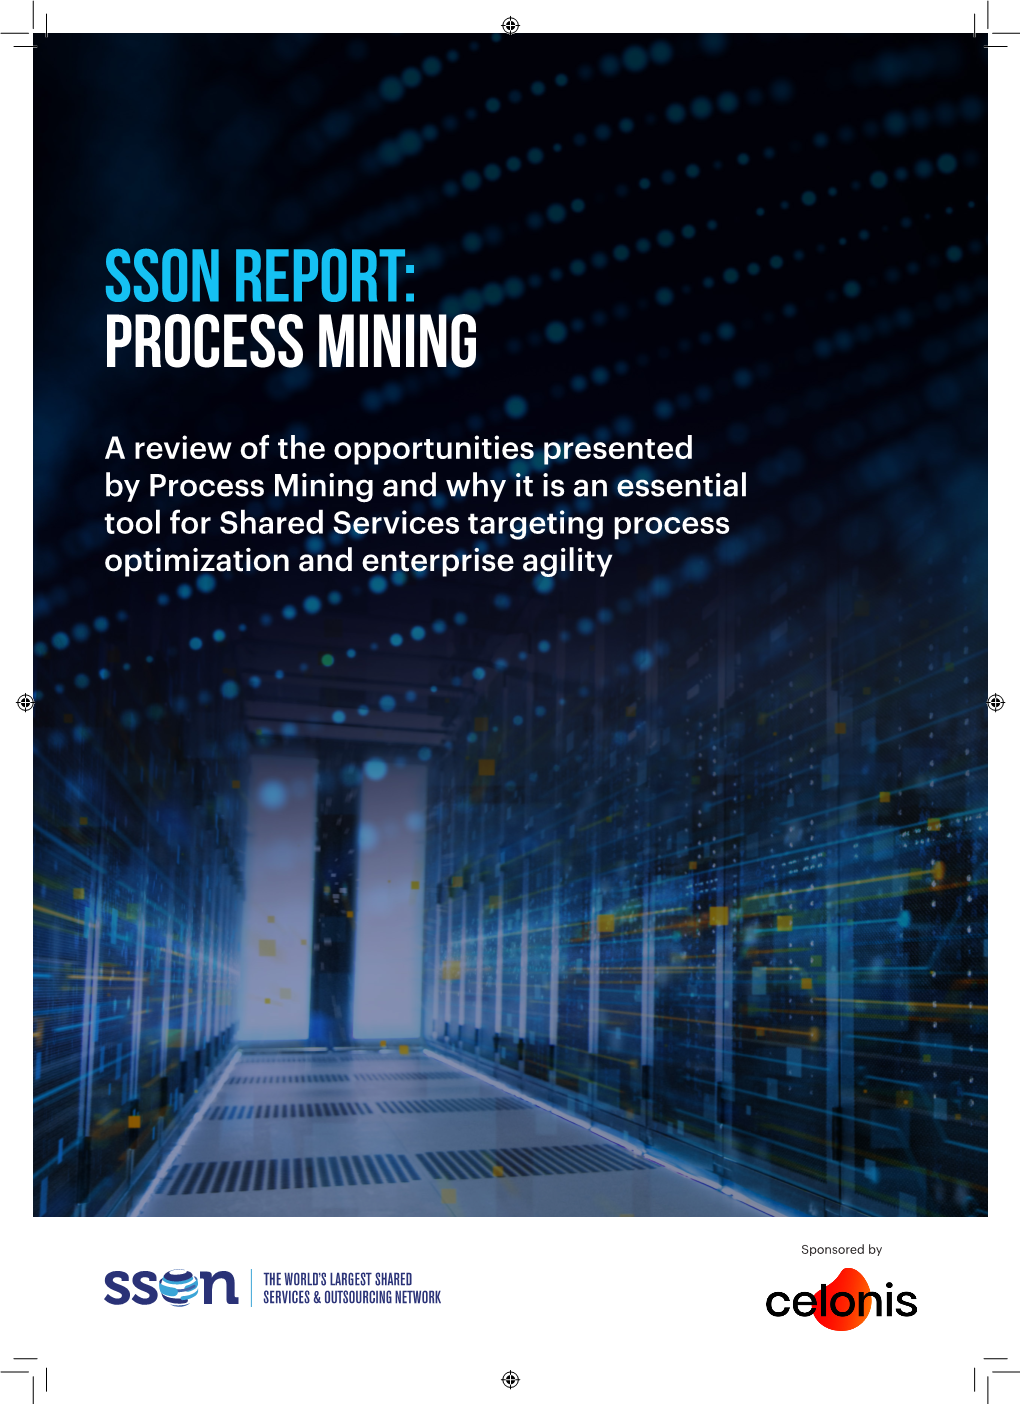 Sson Report: Process Mining